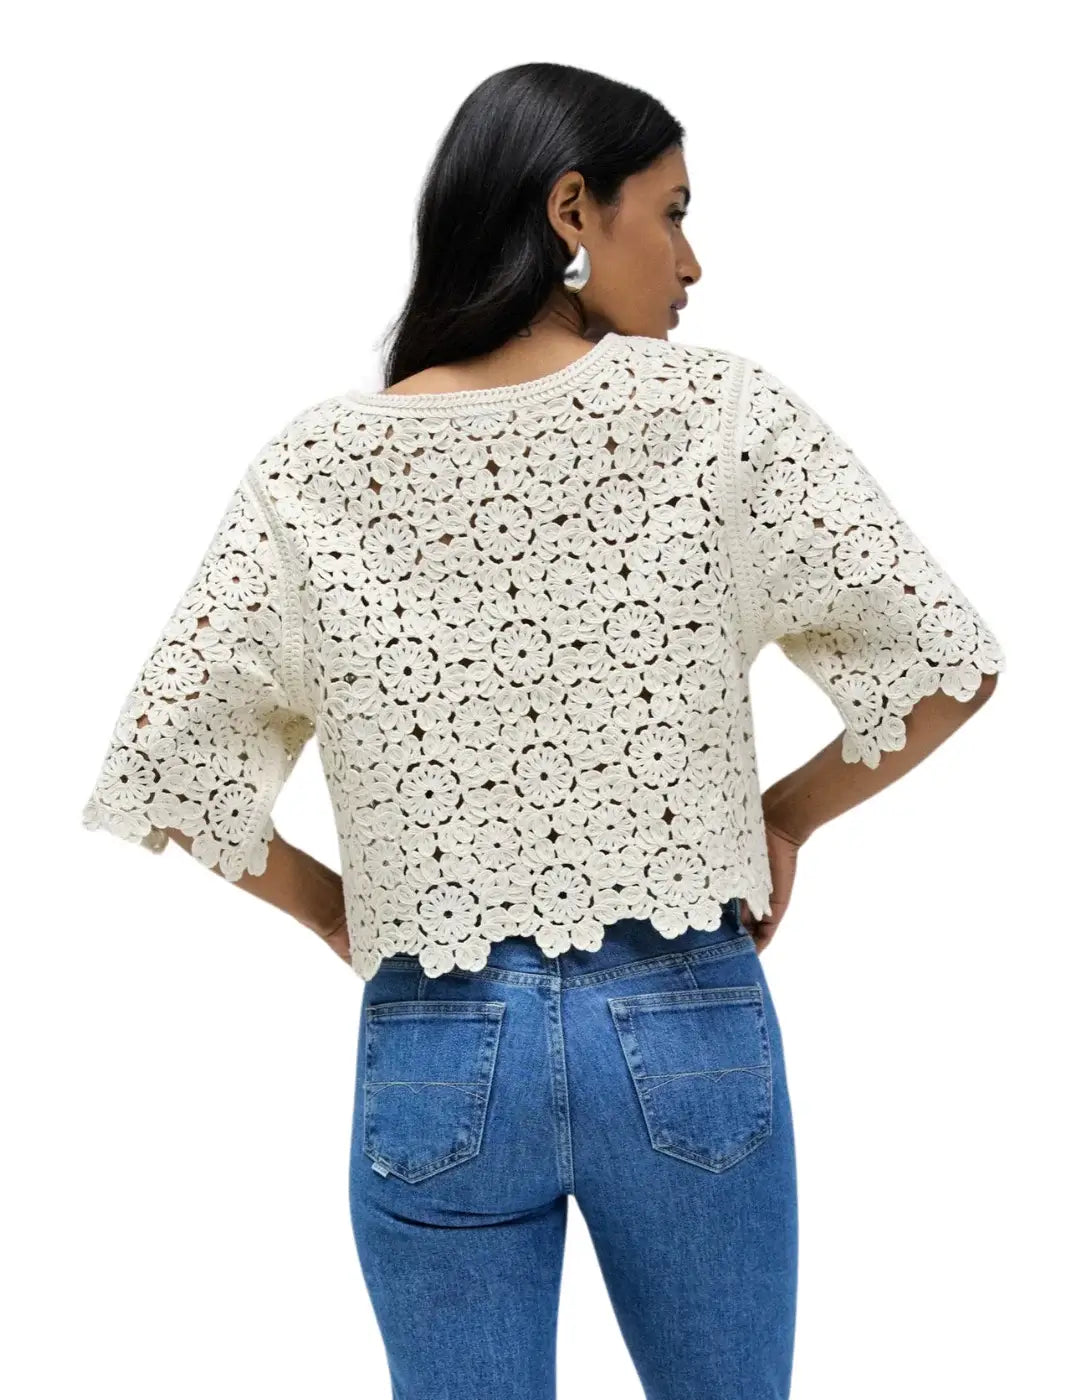 Camiseta Crochet Floral Salsa Jeans Beige | Bicos de Fío